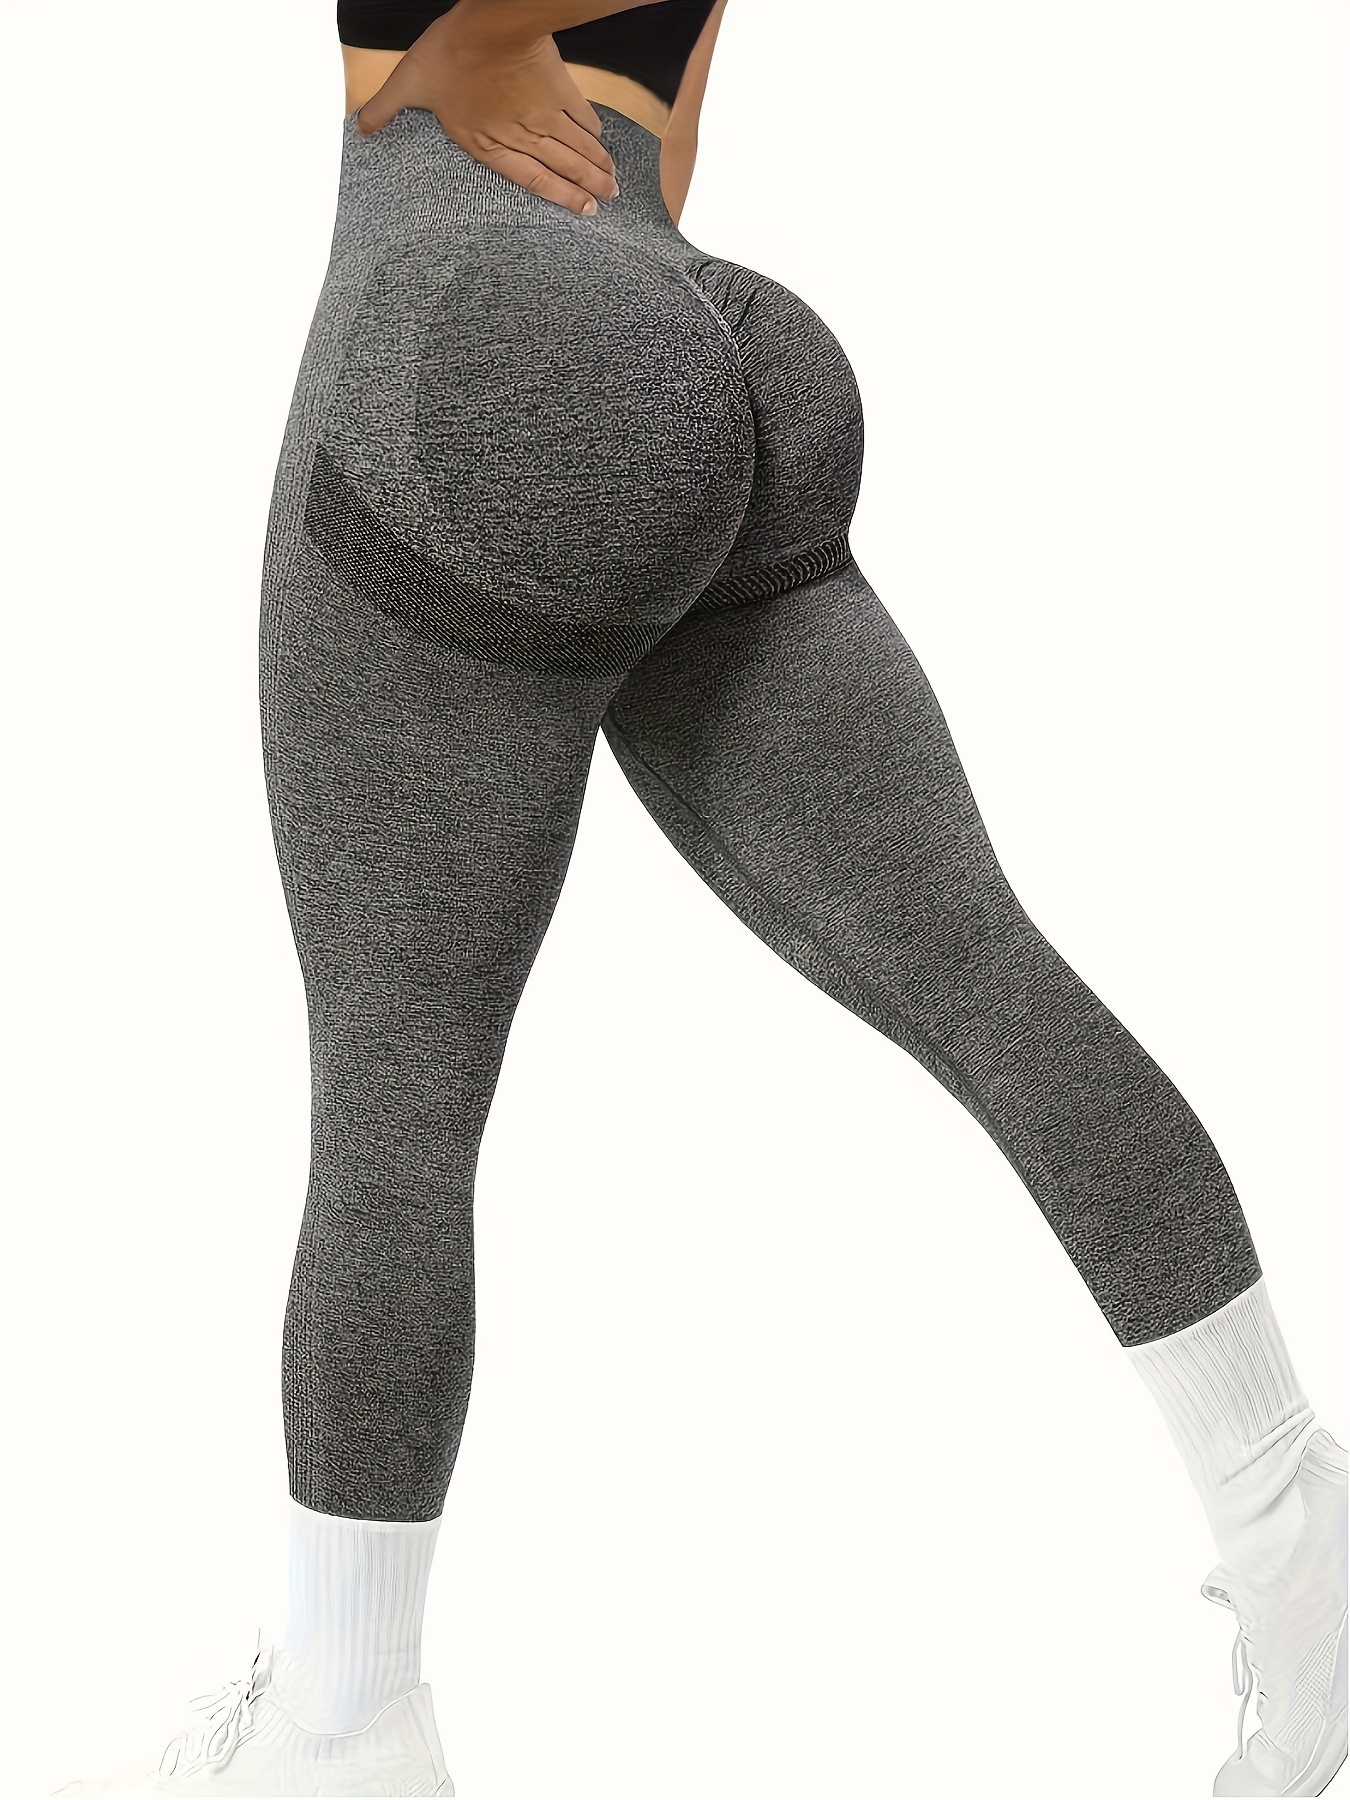 YHWW Leggings,Women Seamless Yoga Pants High Waist Sports Gym